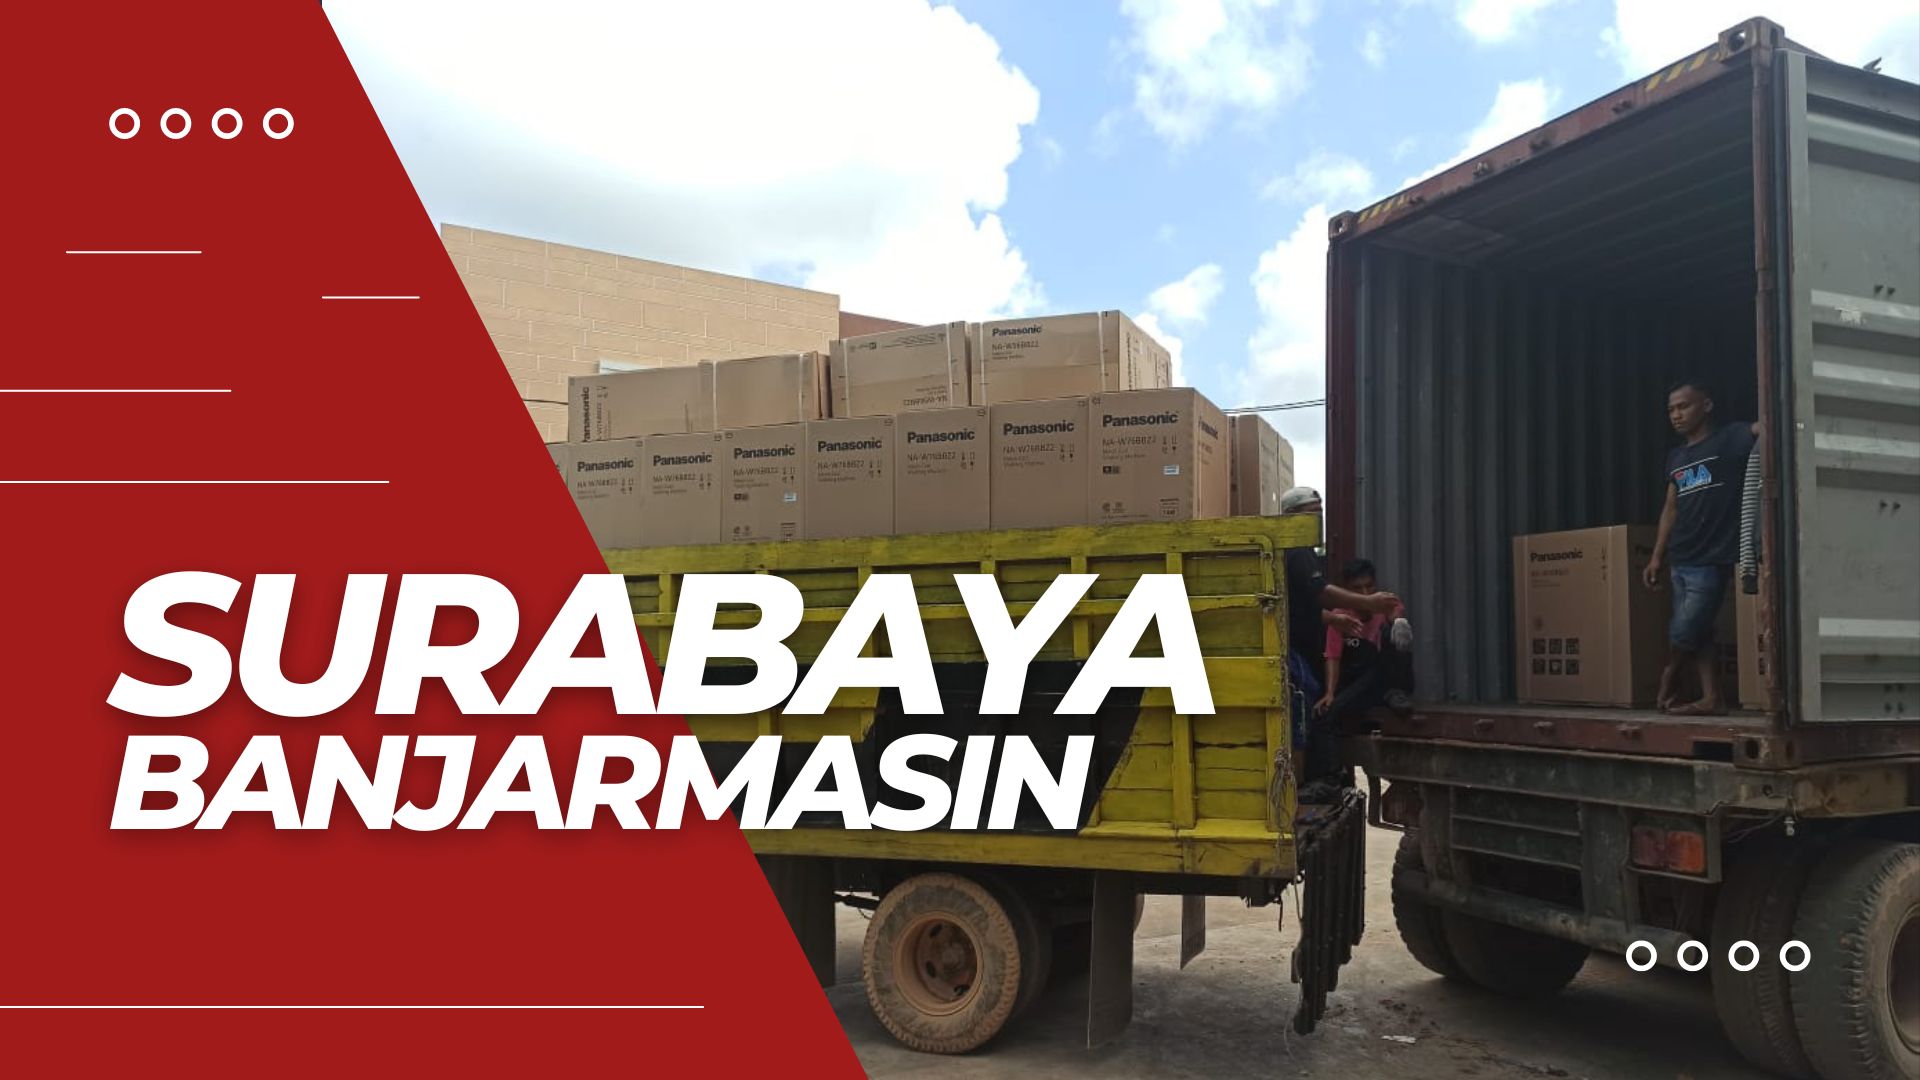 Ongkos Kirim Container Surabaya Banjarmasin